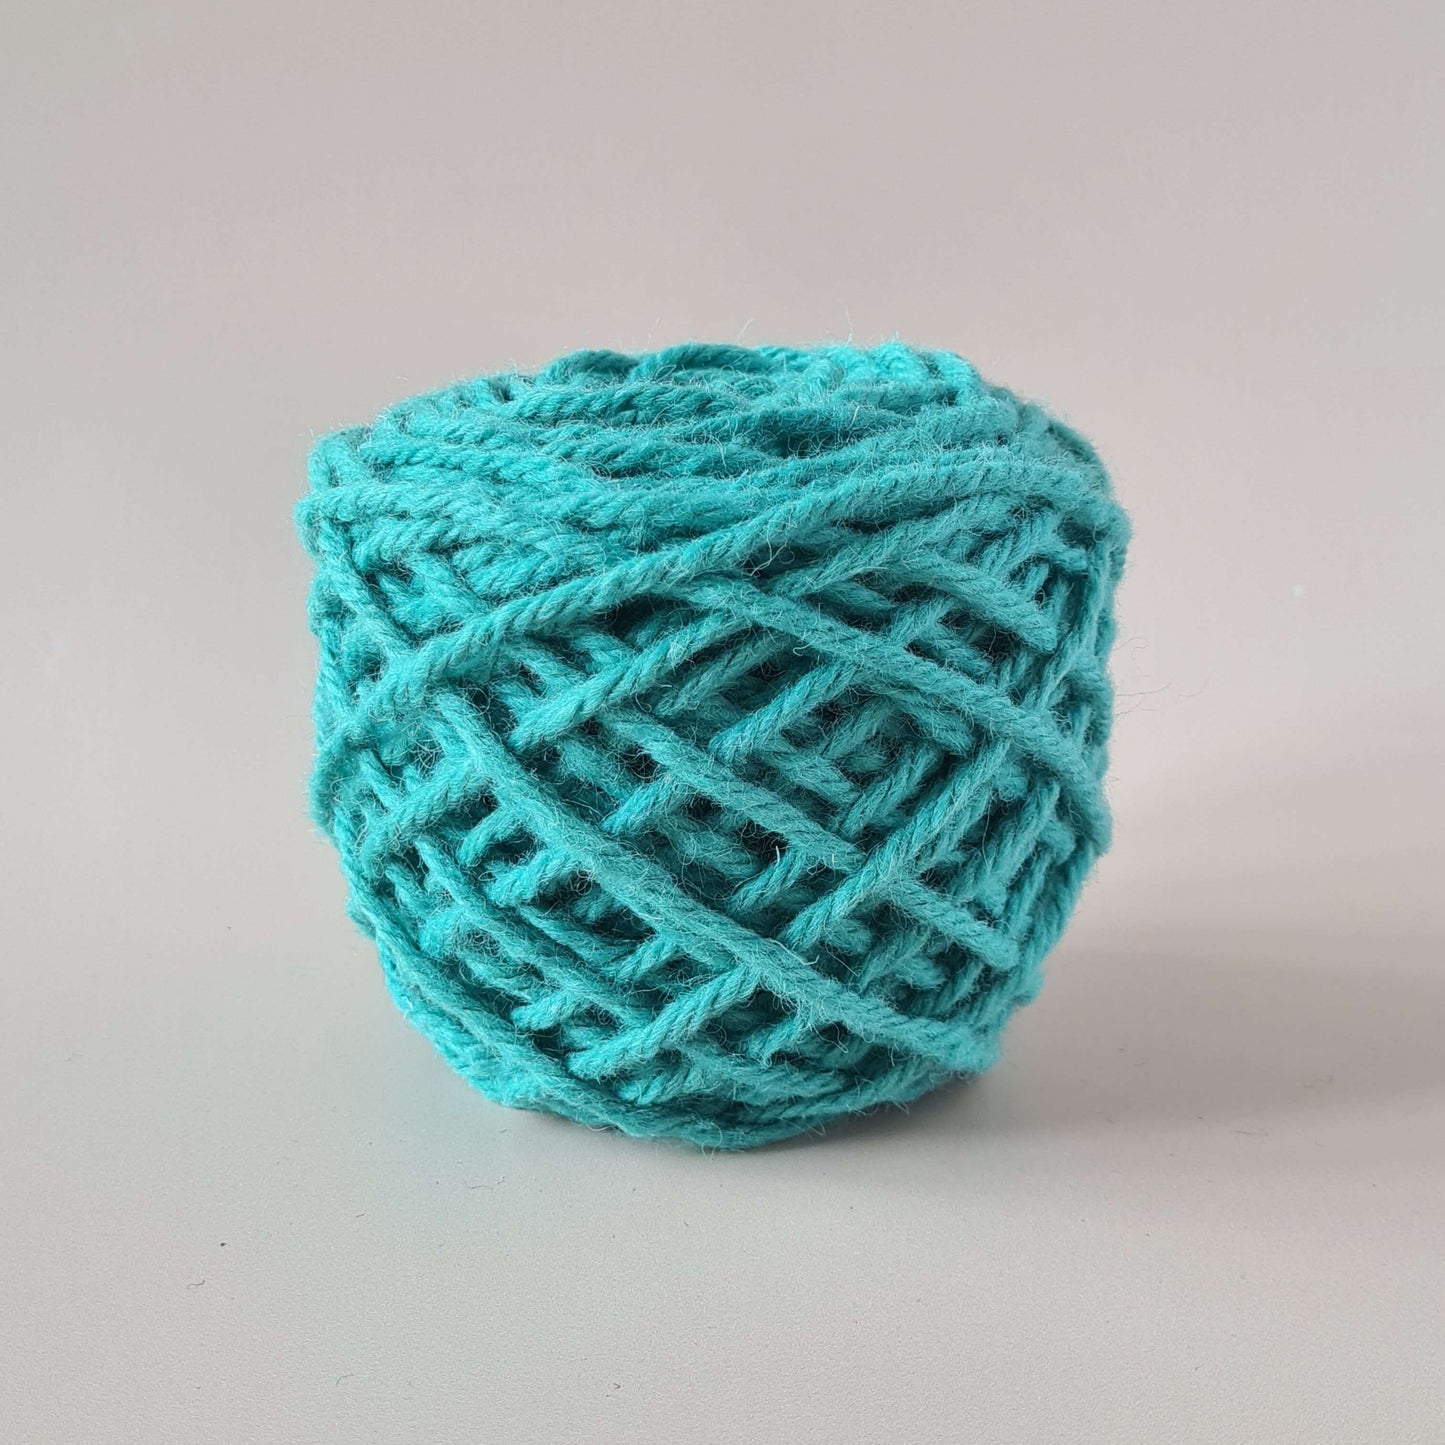 Chunky rug yarn for punch needle